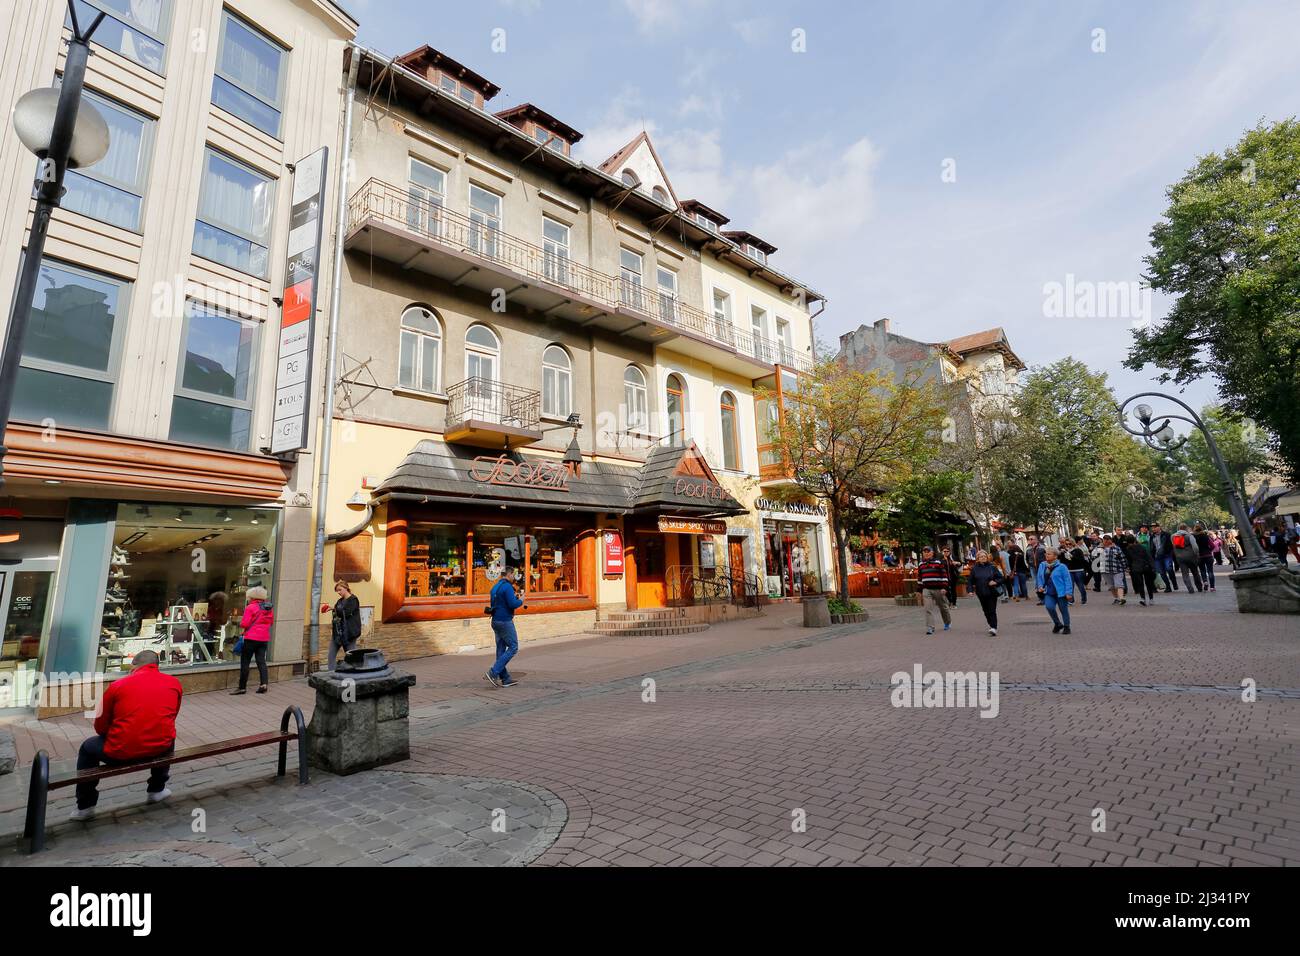 Zakopane, Poland - September 23, 2016: Townhouse called Podhale on the Krupowki street. On the ground floor the entrance to the grocery store, decorat Stock Photo